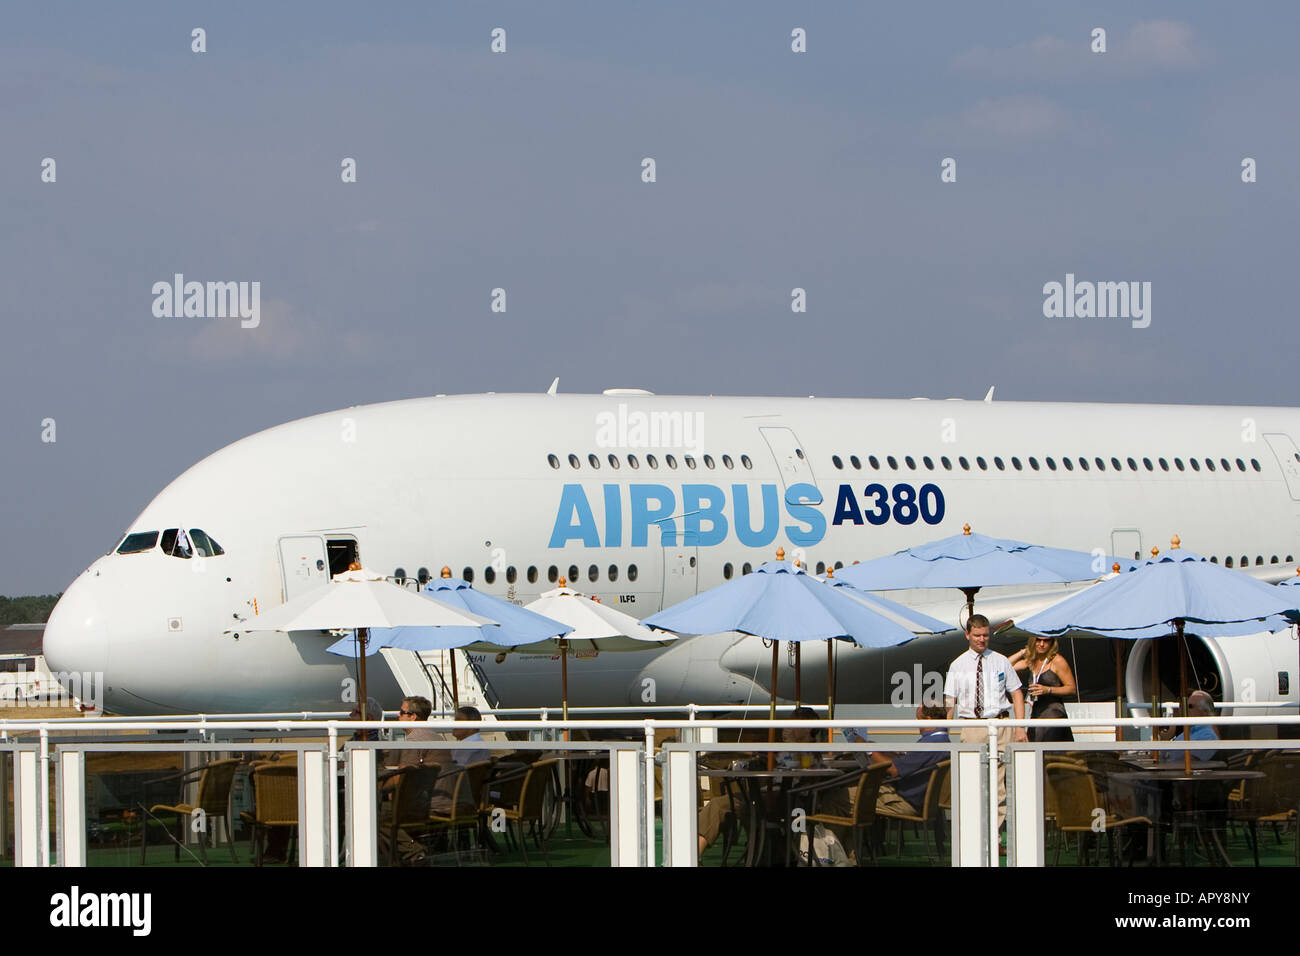 Airbus A380 superjumbo new technology advanced biggest passenger